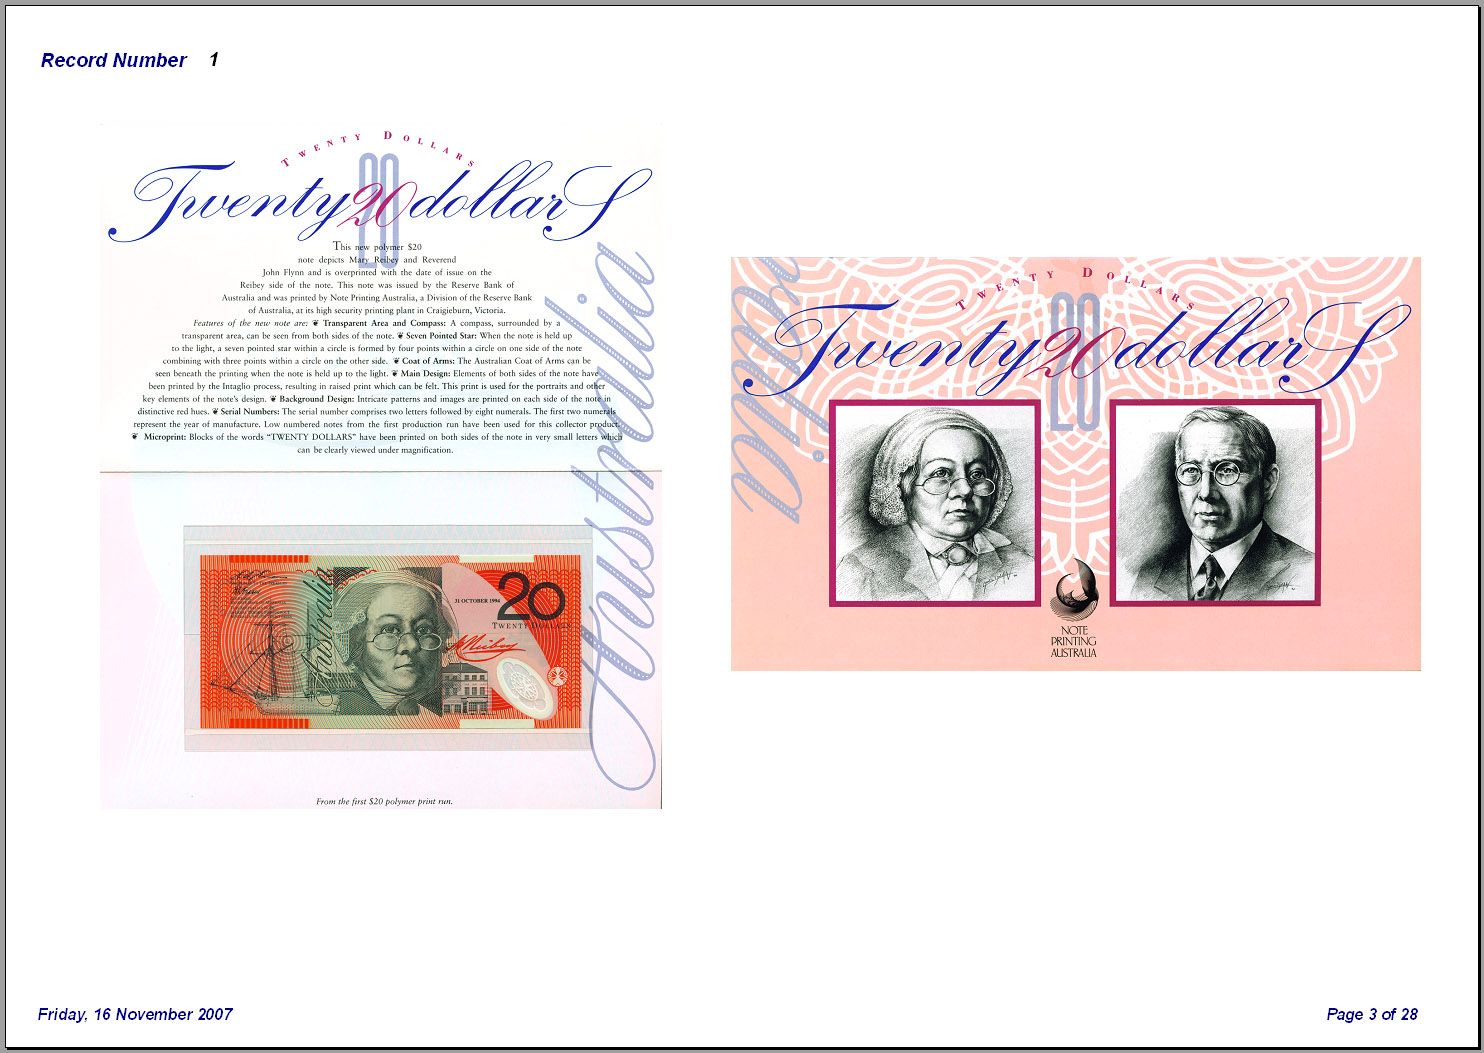 Banknote Note Image Database Software Pro CDROM Windows